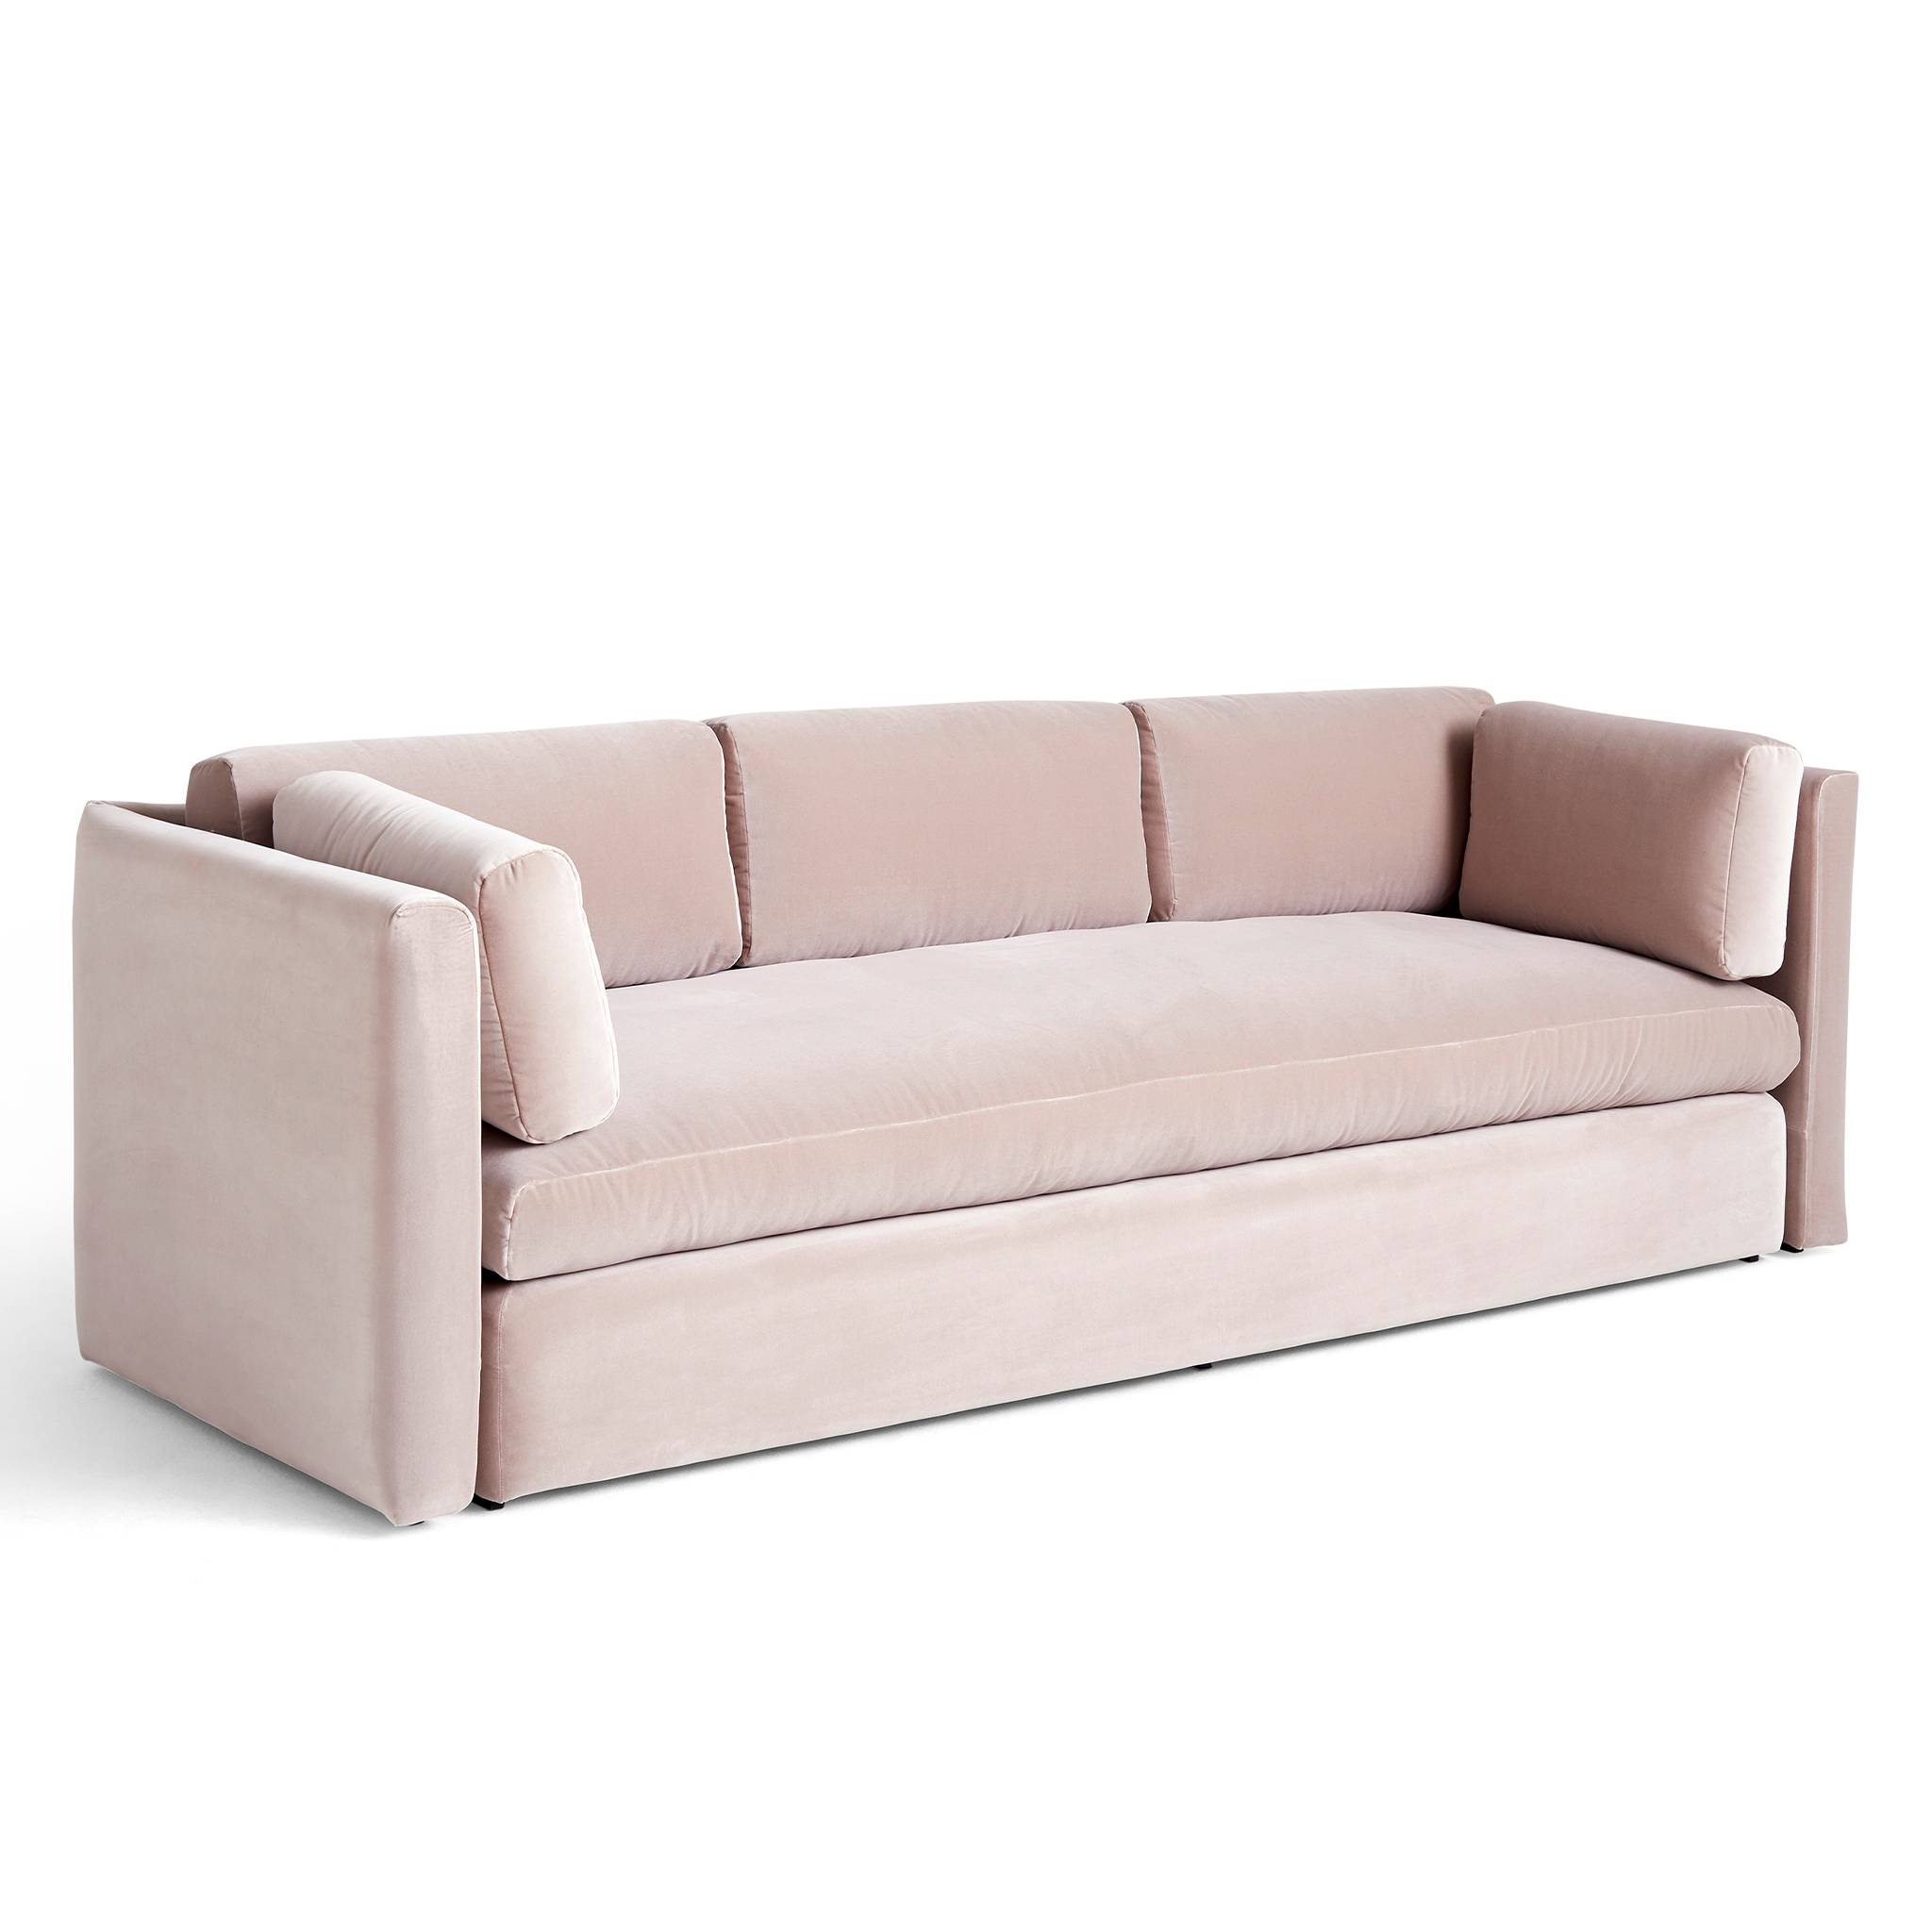 Hackney Sofa 3 Seater by Hay